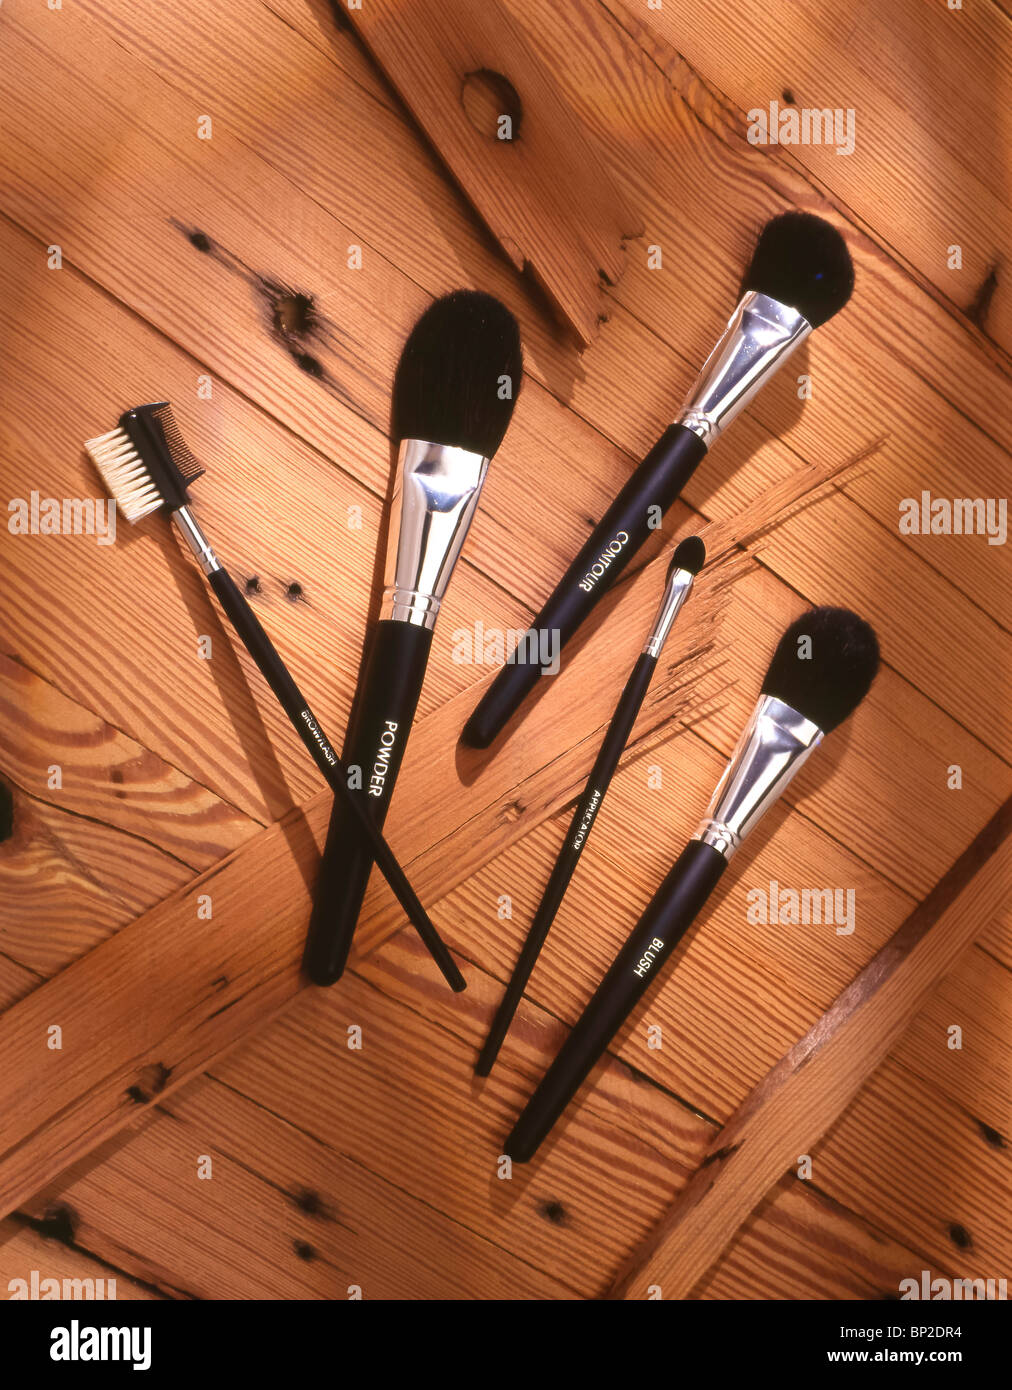 Makeup brushes styled on wood Stock Photo